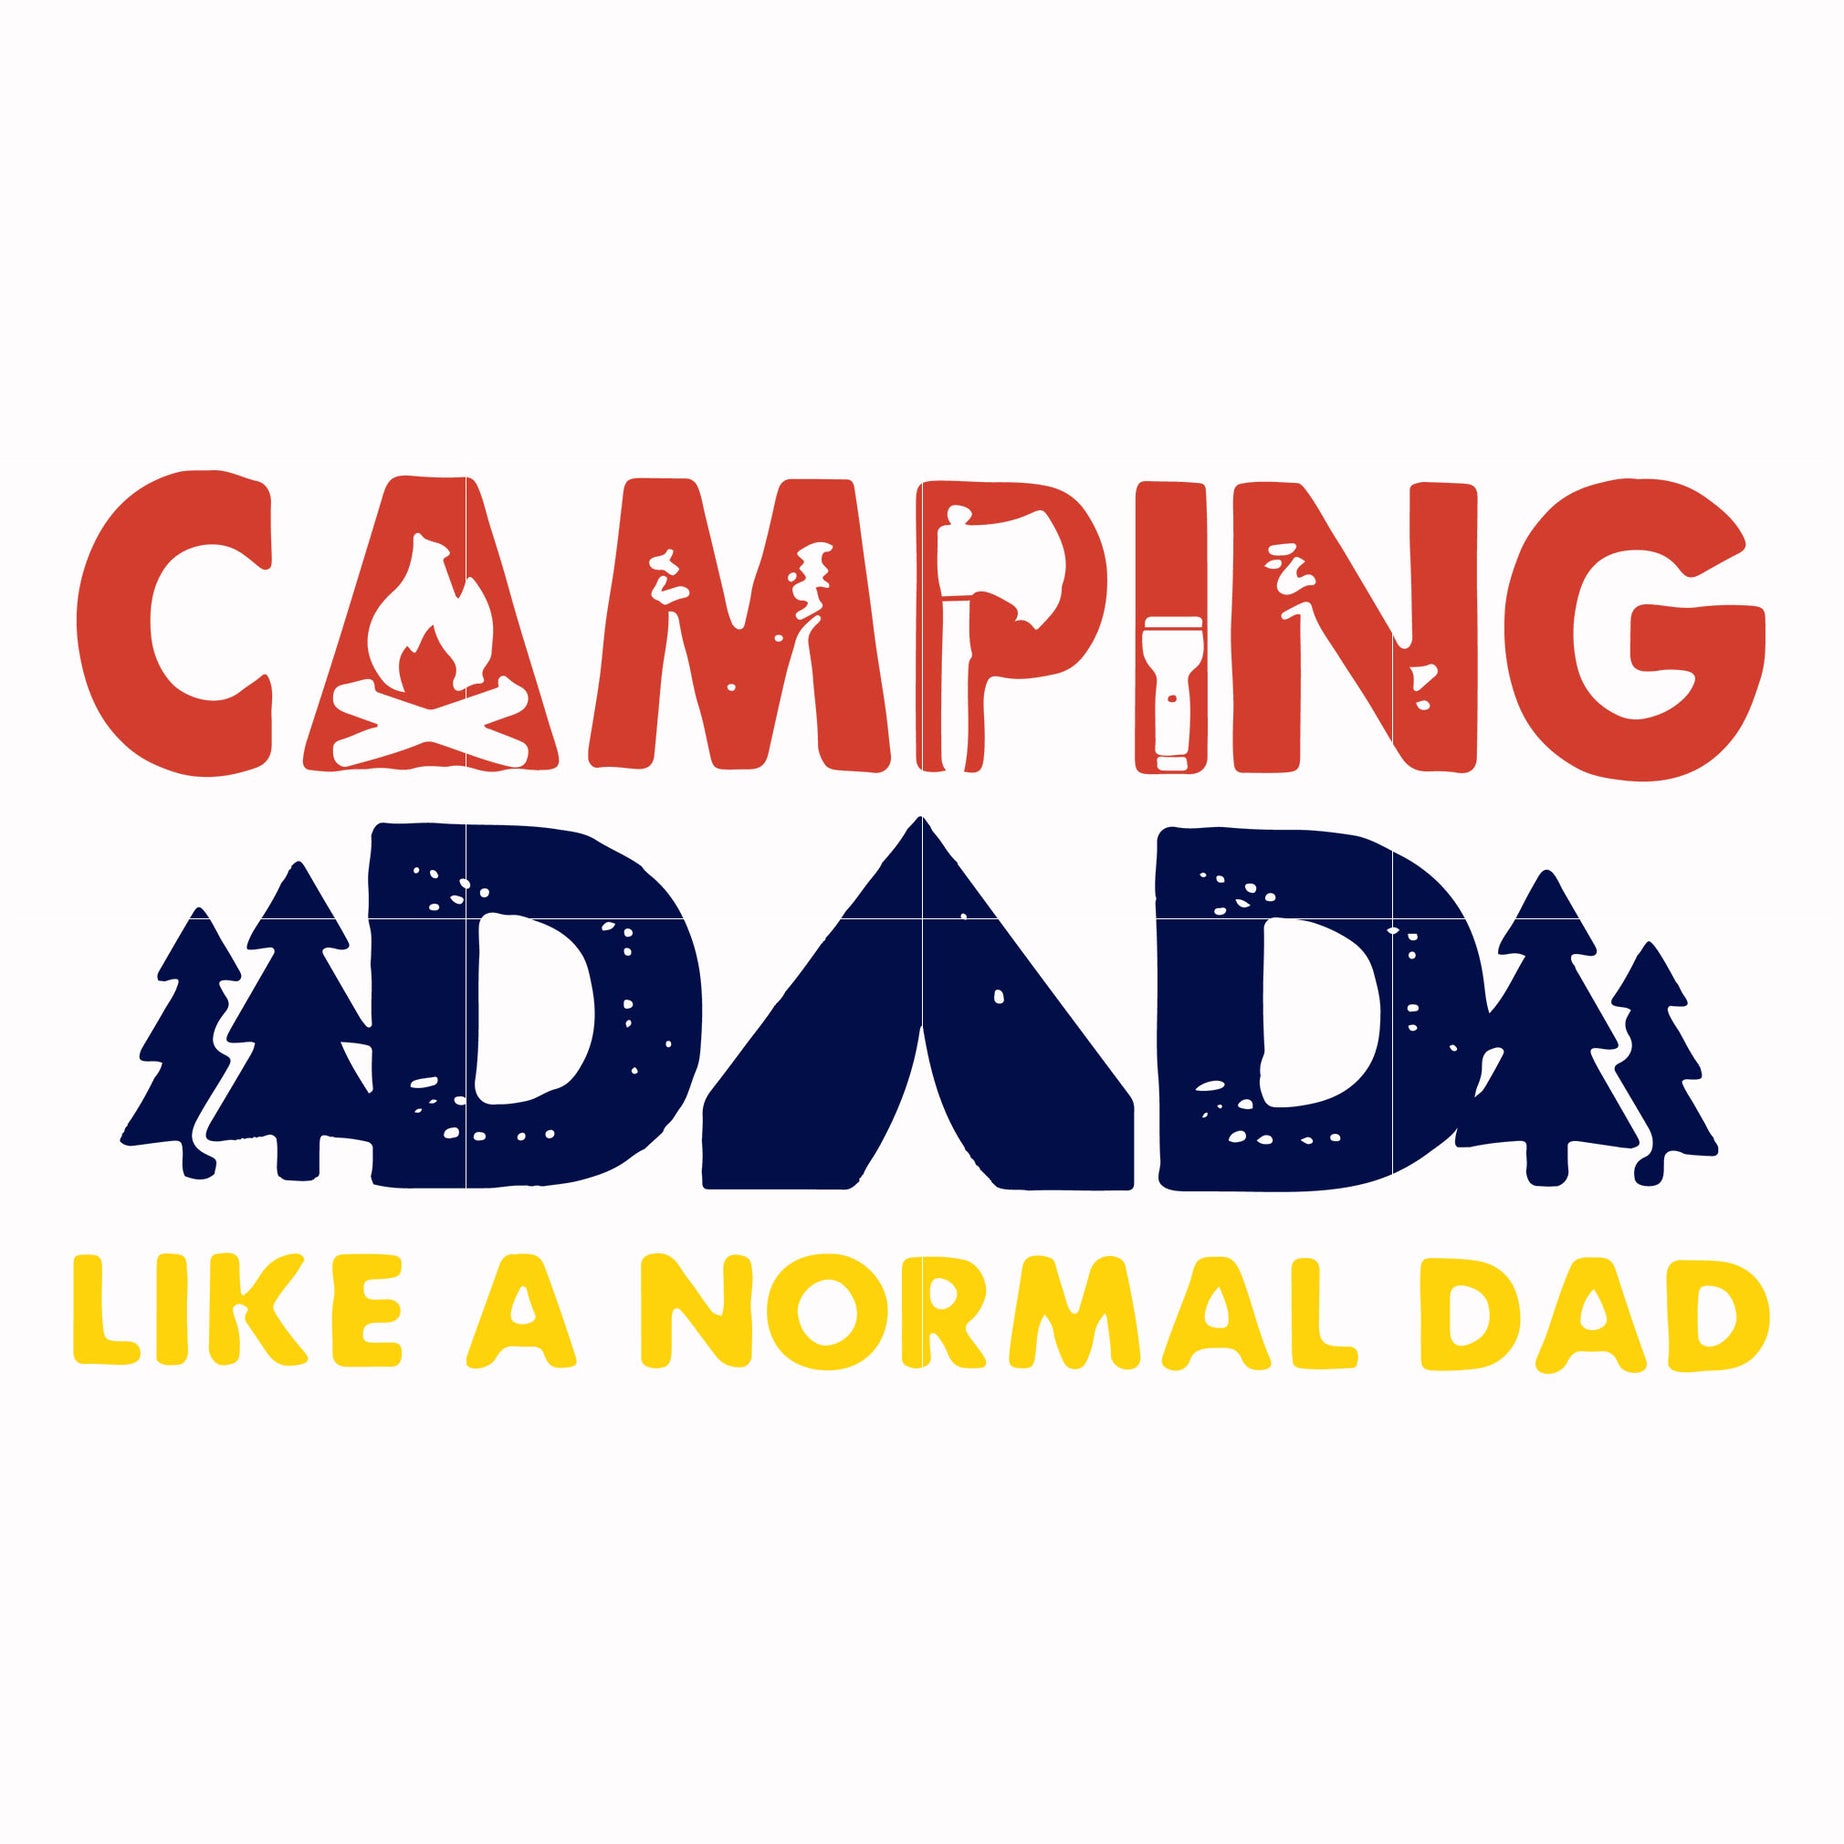 Camping dad like a normal dad except way cooler svg, png, dxf, eps digital file CMP062